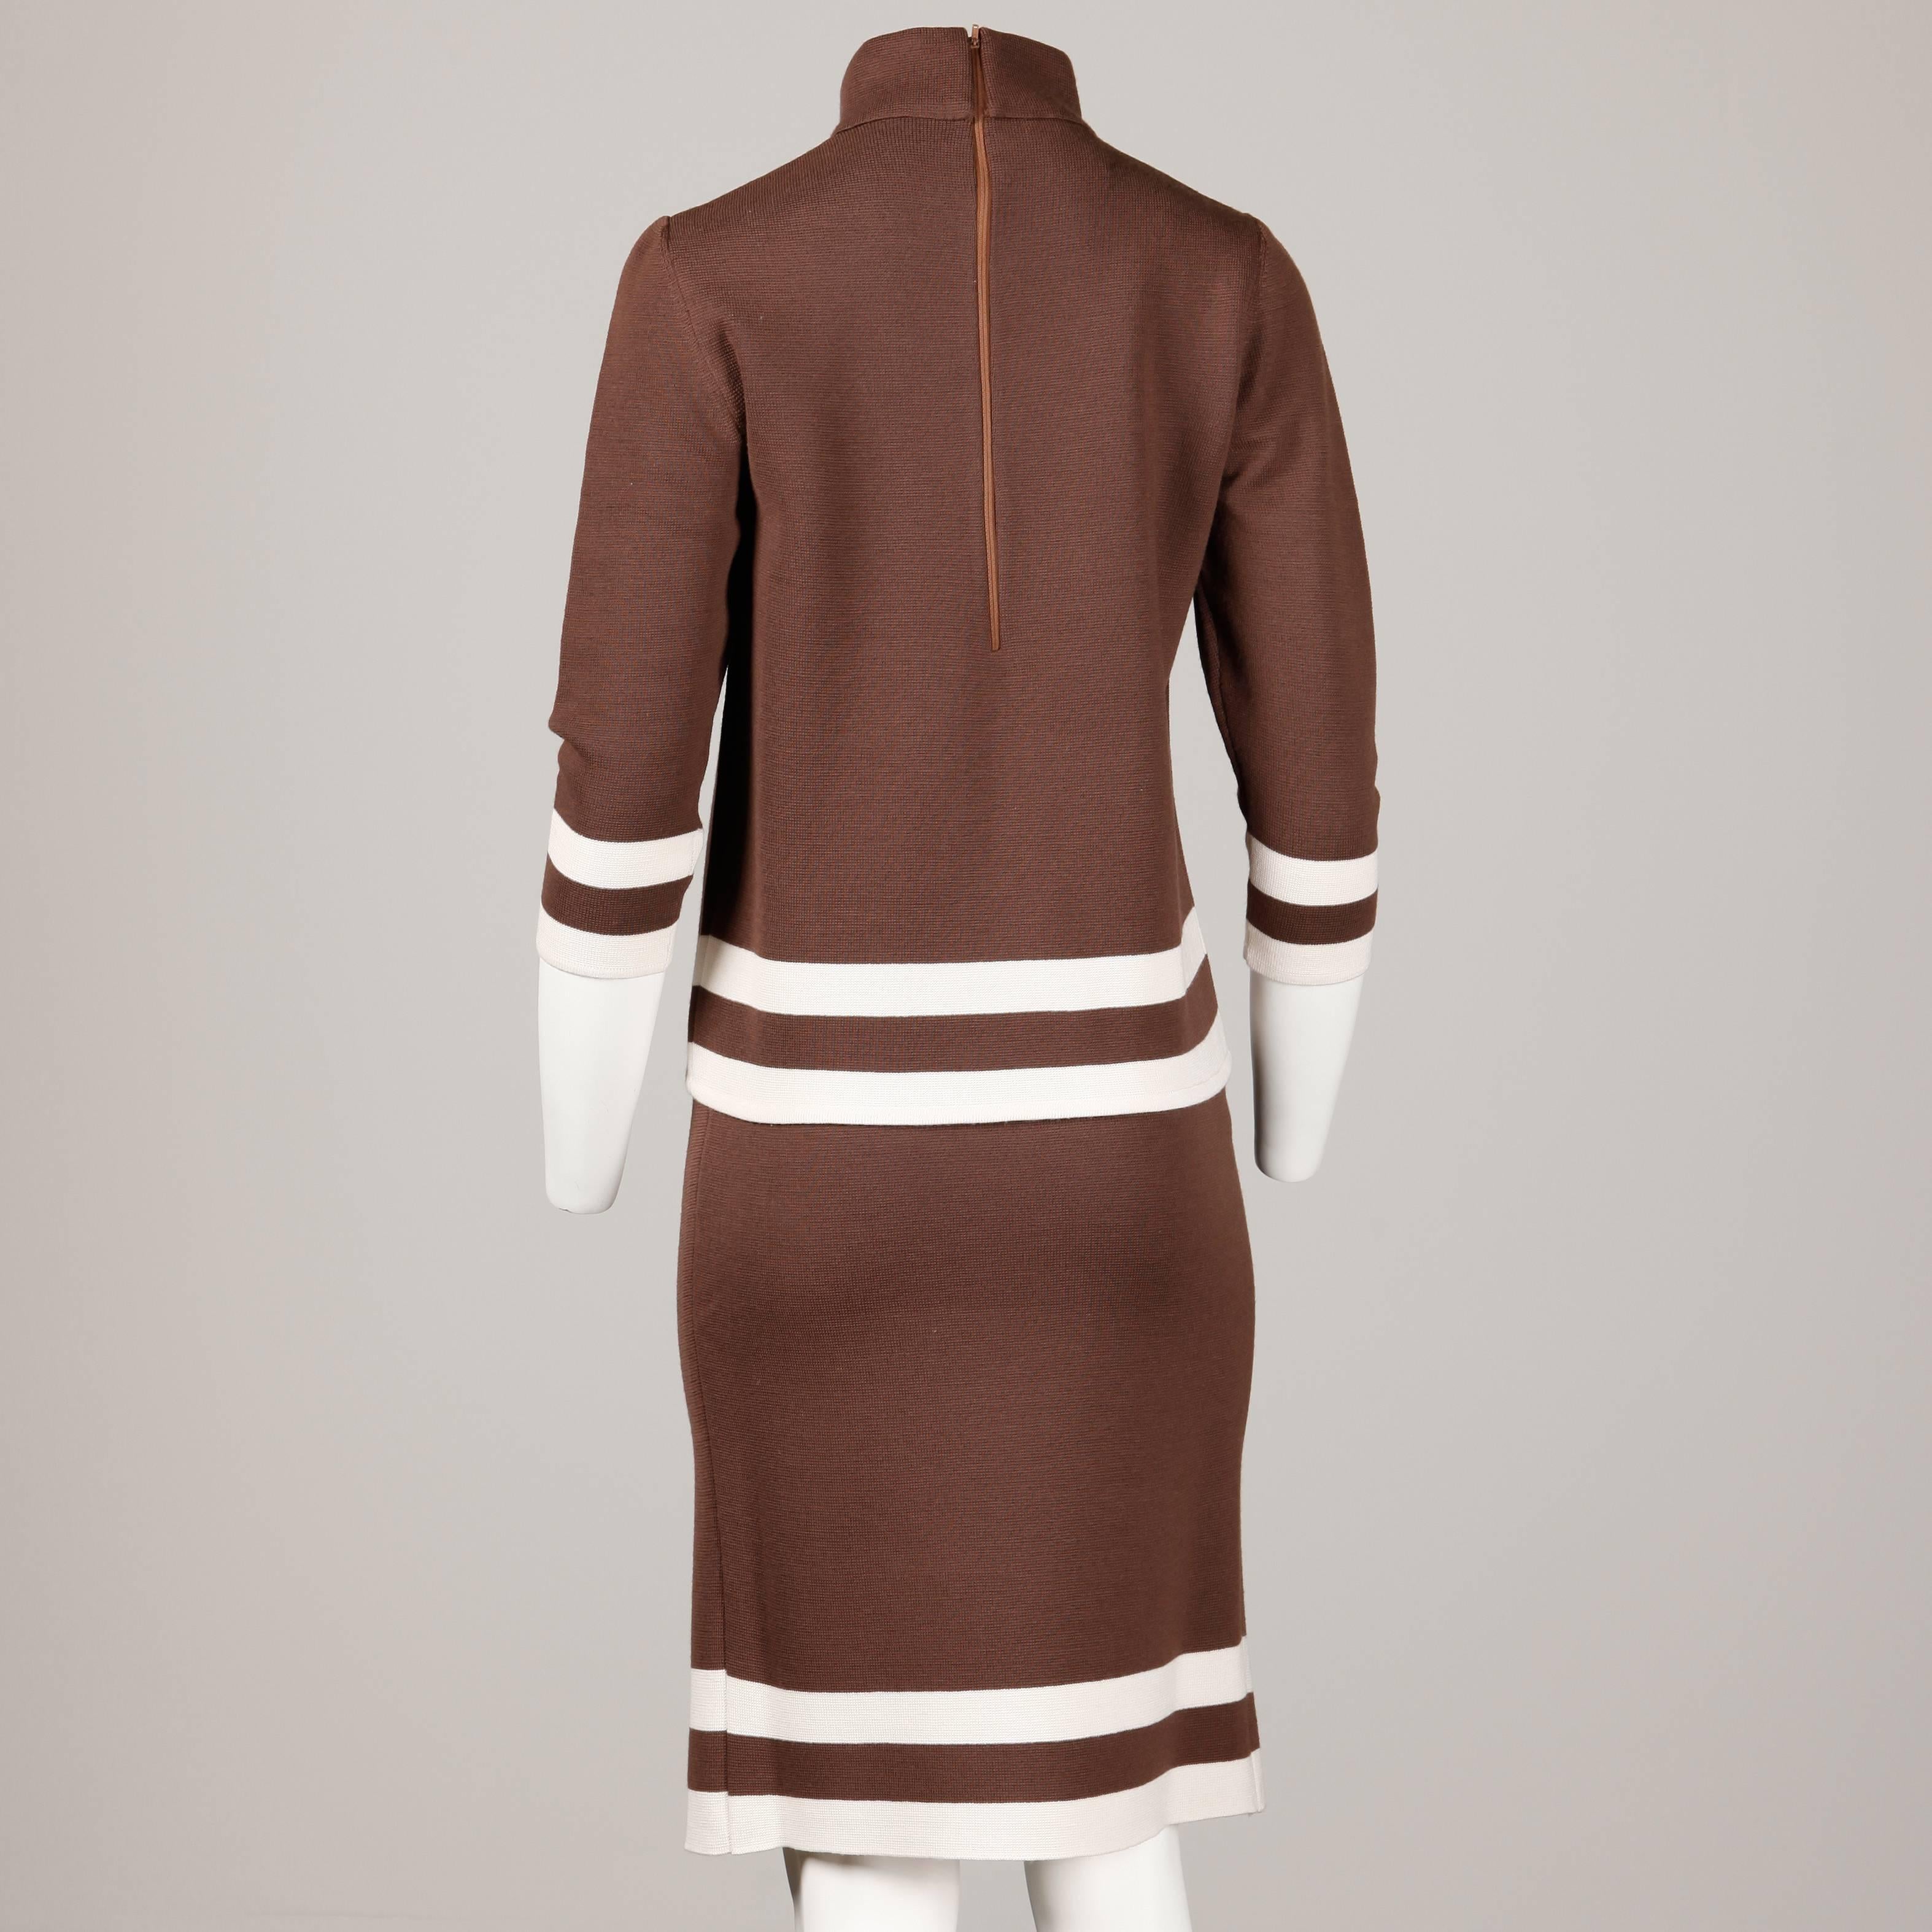 Unworn 1960s Deadstock Wool Knit Mod Color Block Sweater + Skirt Suit Ensemble For Sale 1